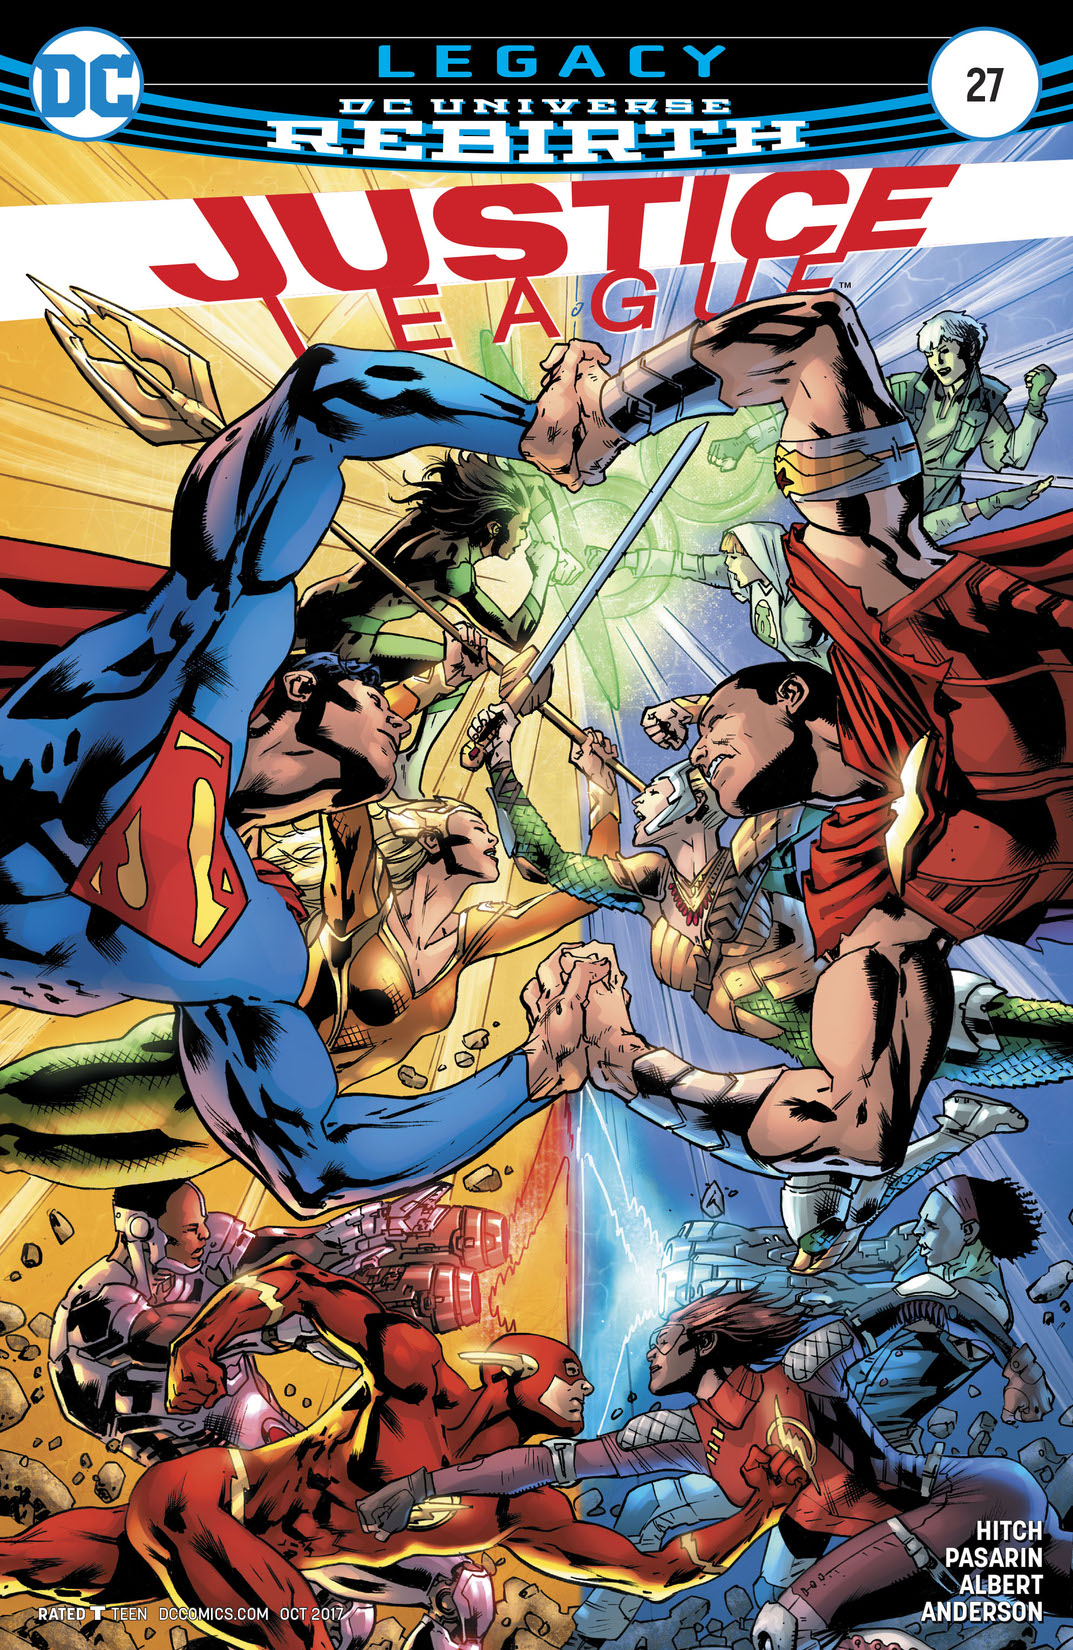 Justice League (2016-) #27 preview images